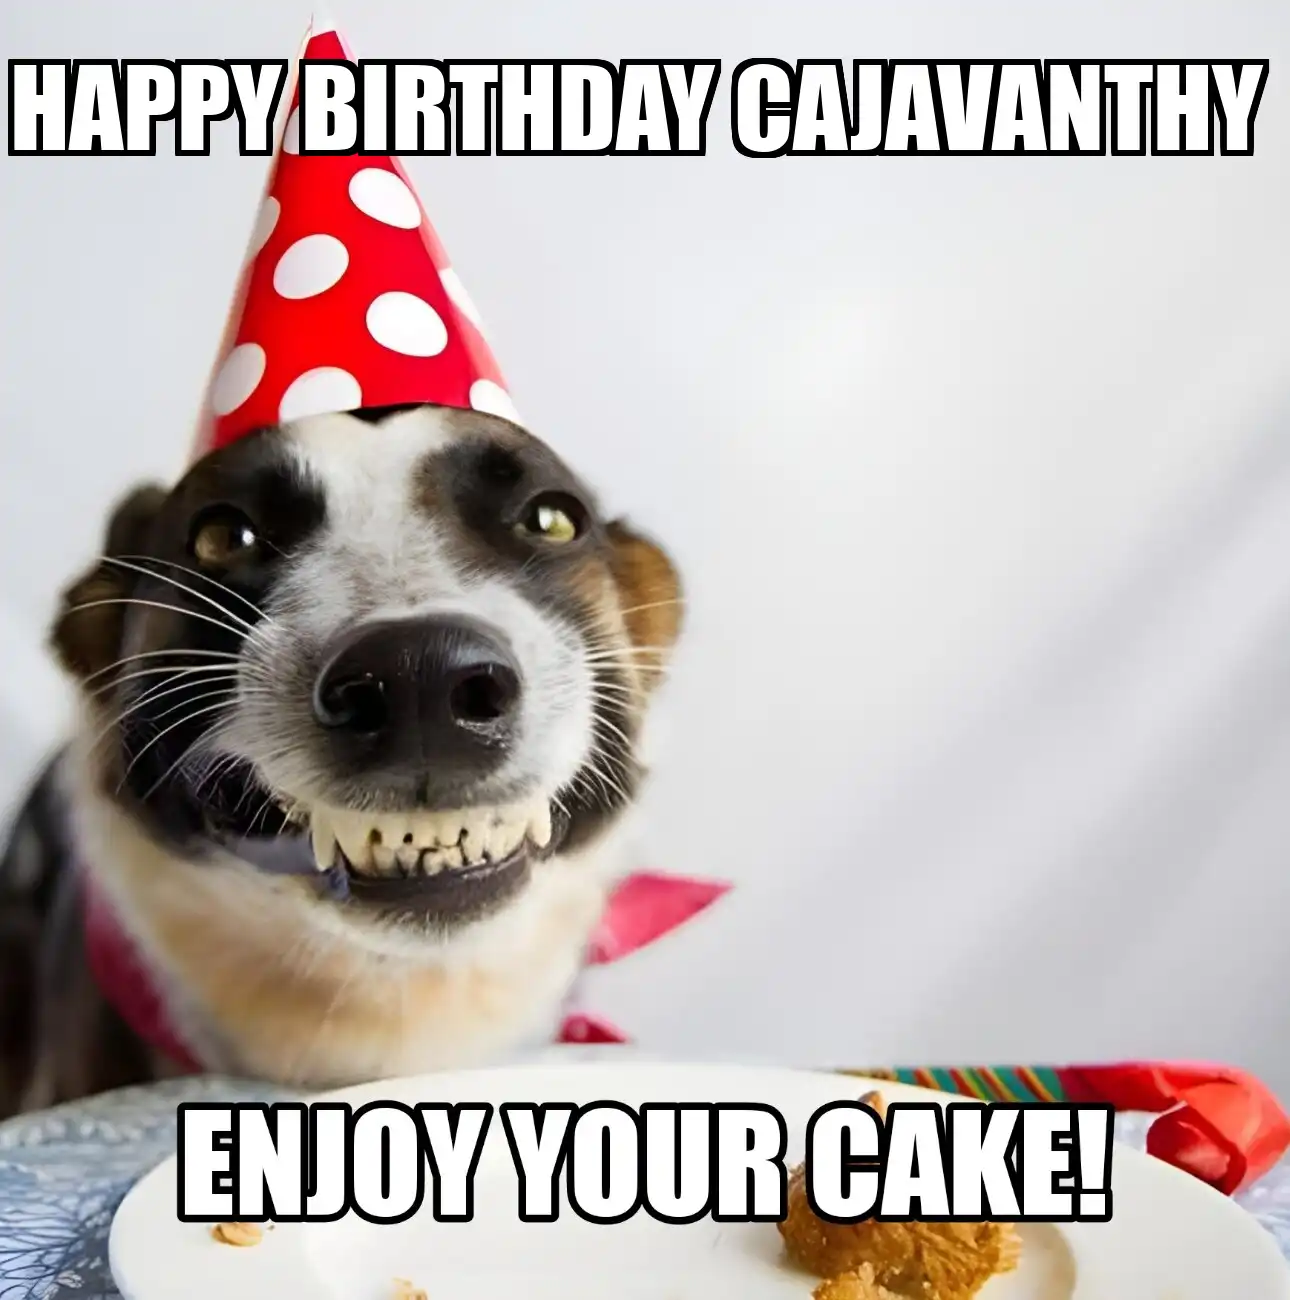 Happy Birthday Cajavanthy Enjoy Your Cake Dog Meme